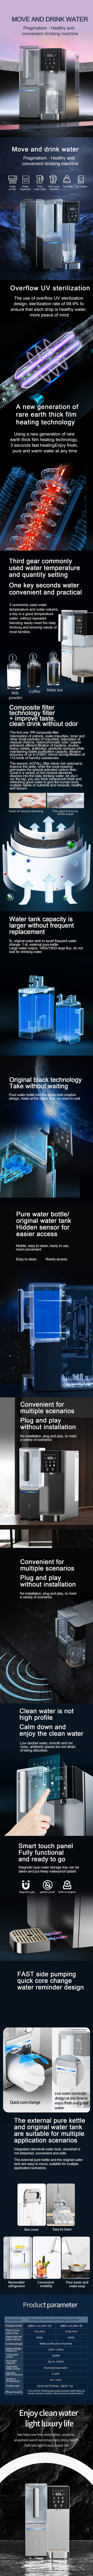 Reverse Osmosis Water Filter Countertop Brochure